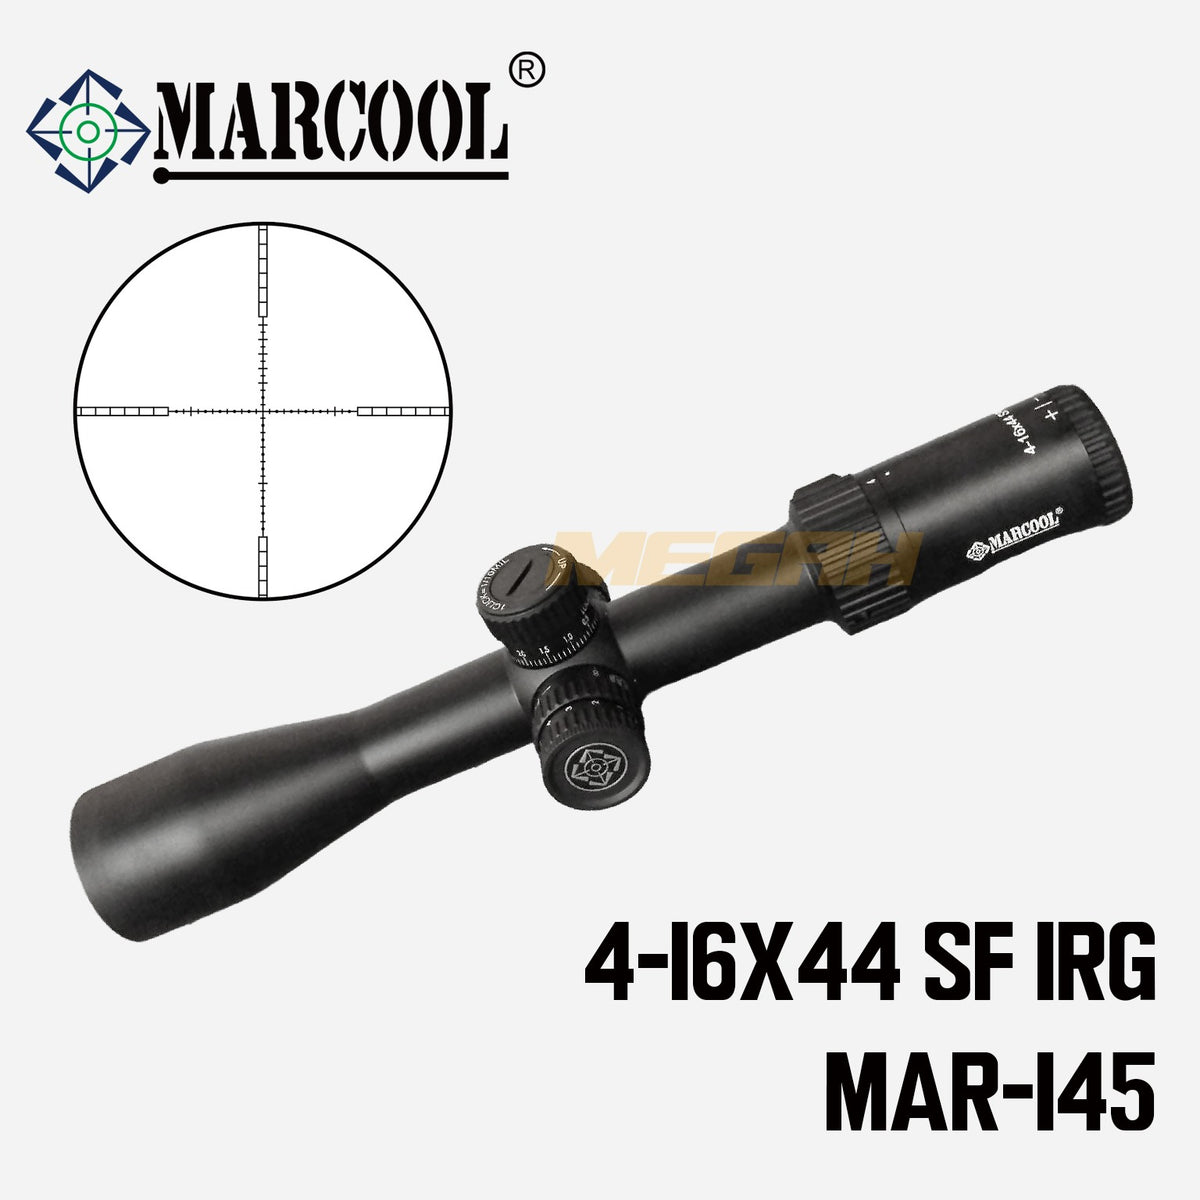 MARCOOL 4-16x44 SF IRG